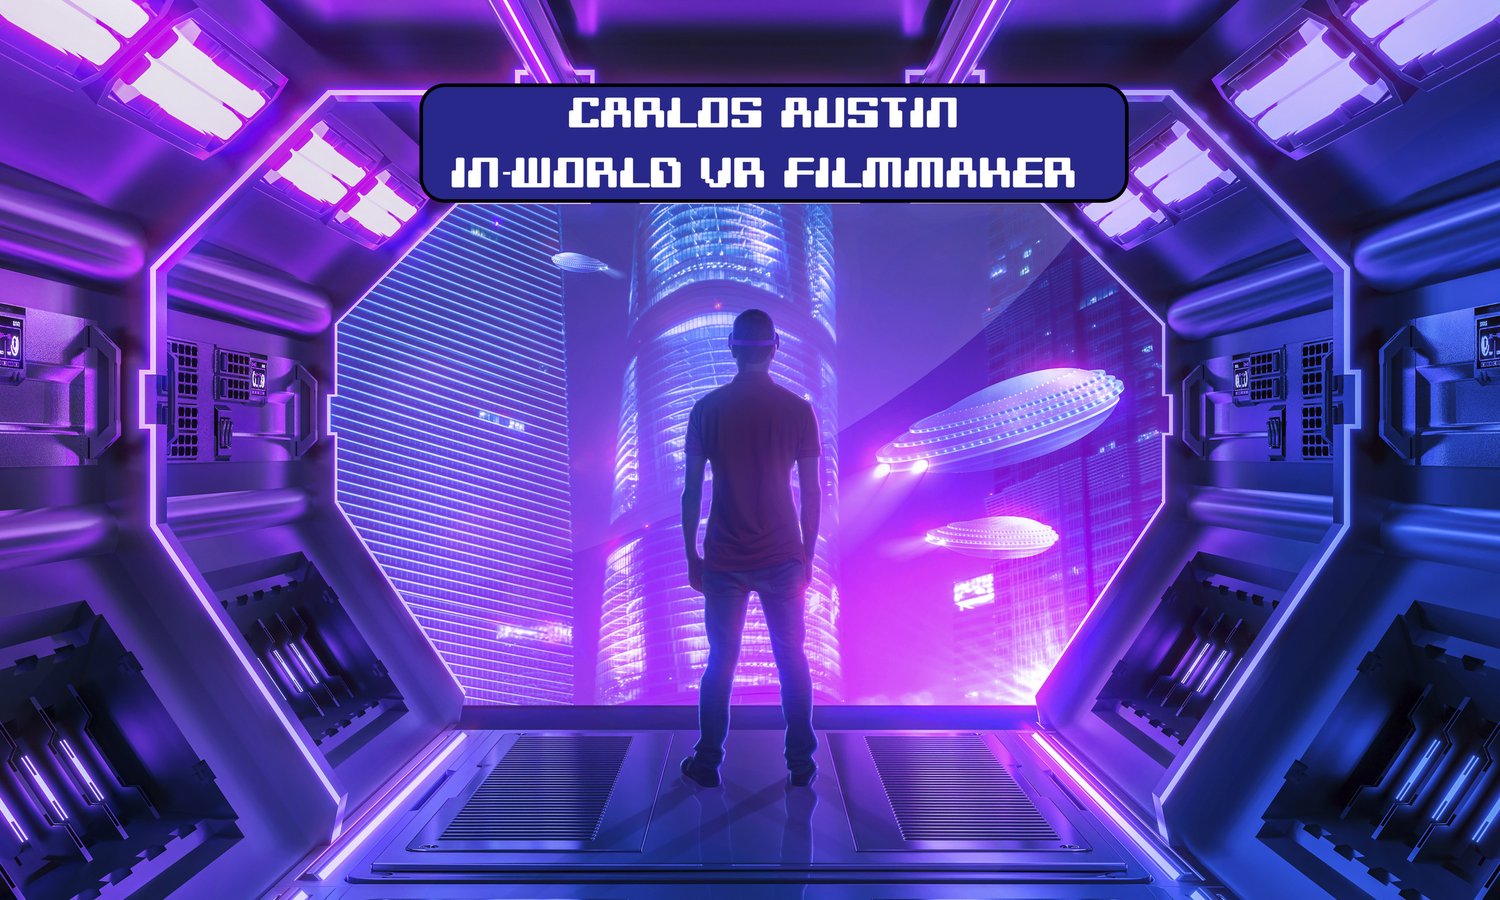 Episode 143 - In-World VR Filmmaker Carlos Austin